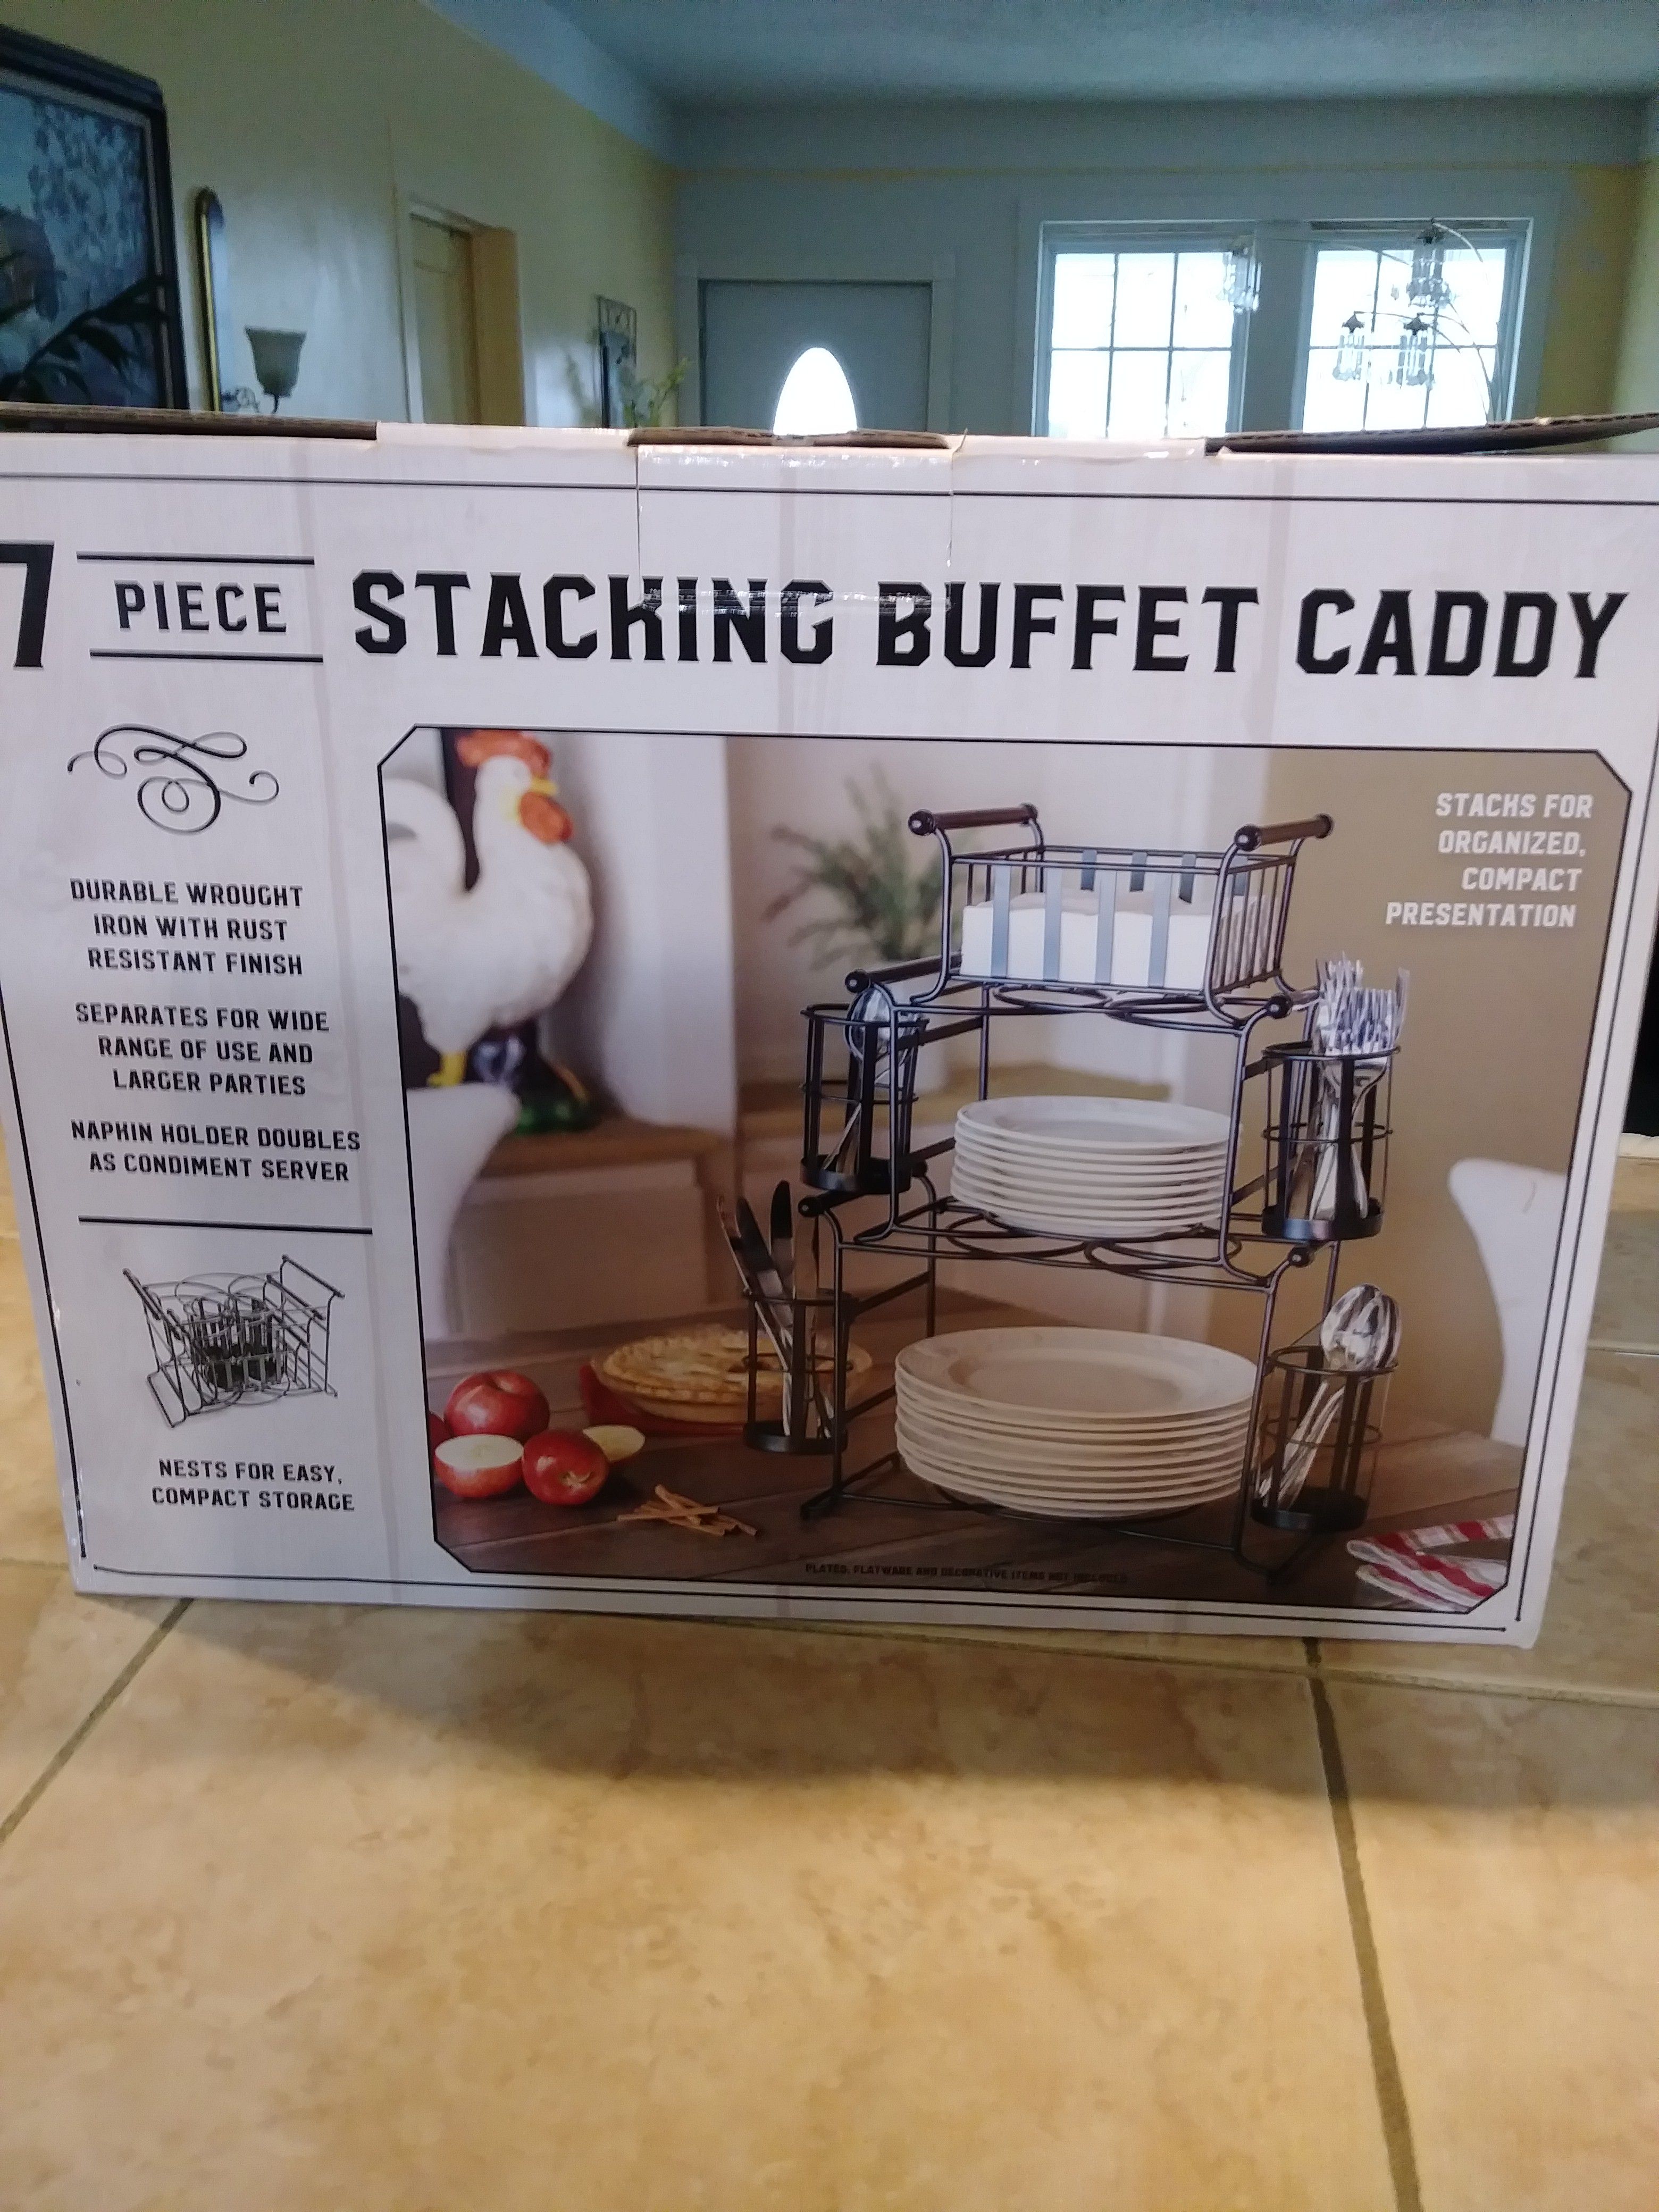 7Piece/Stacking Buffet Caddy